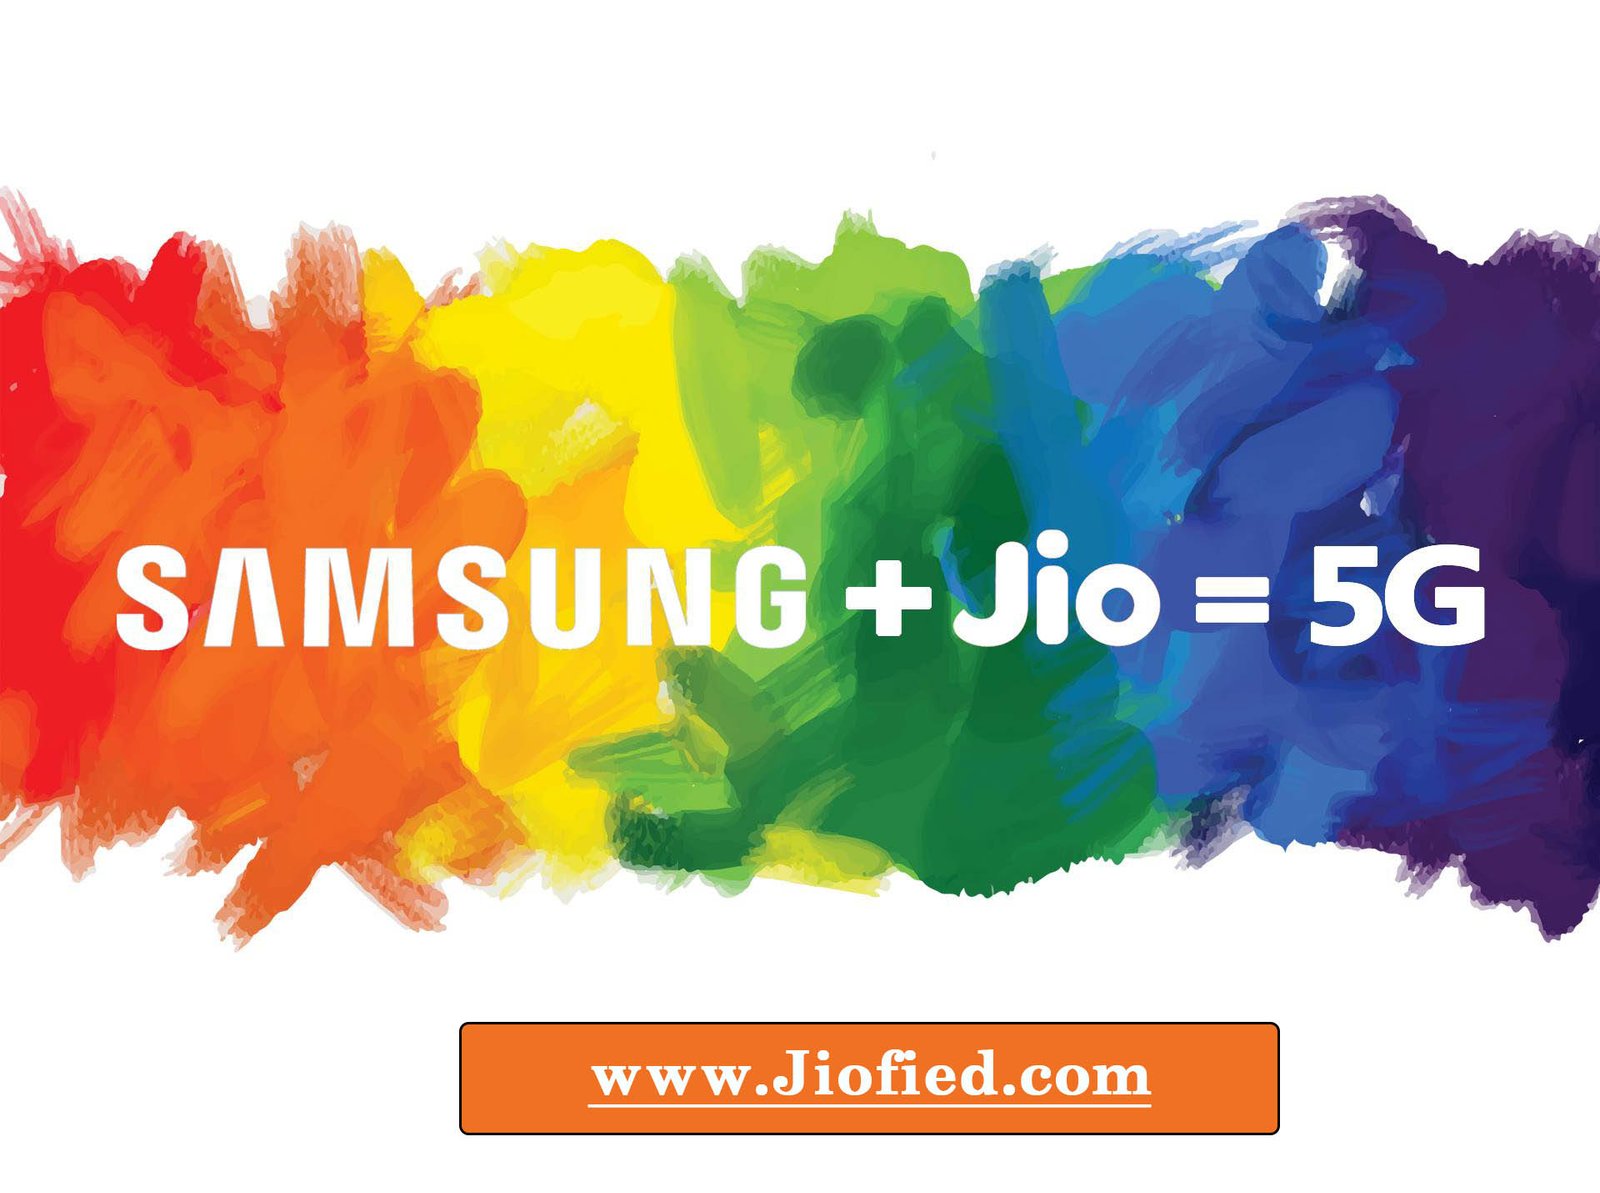 Samsung & Jio 5G to India